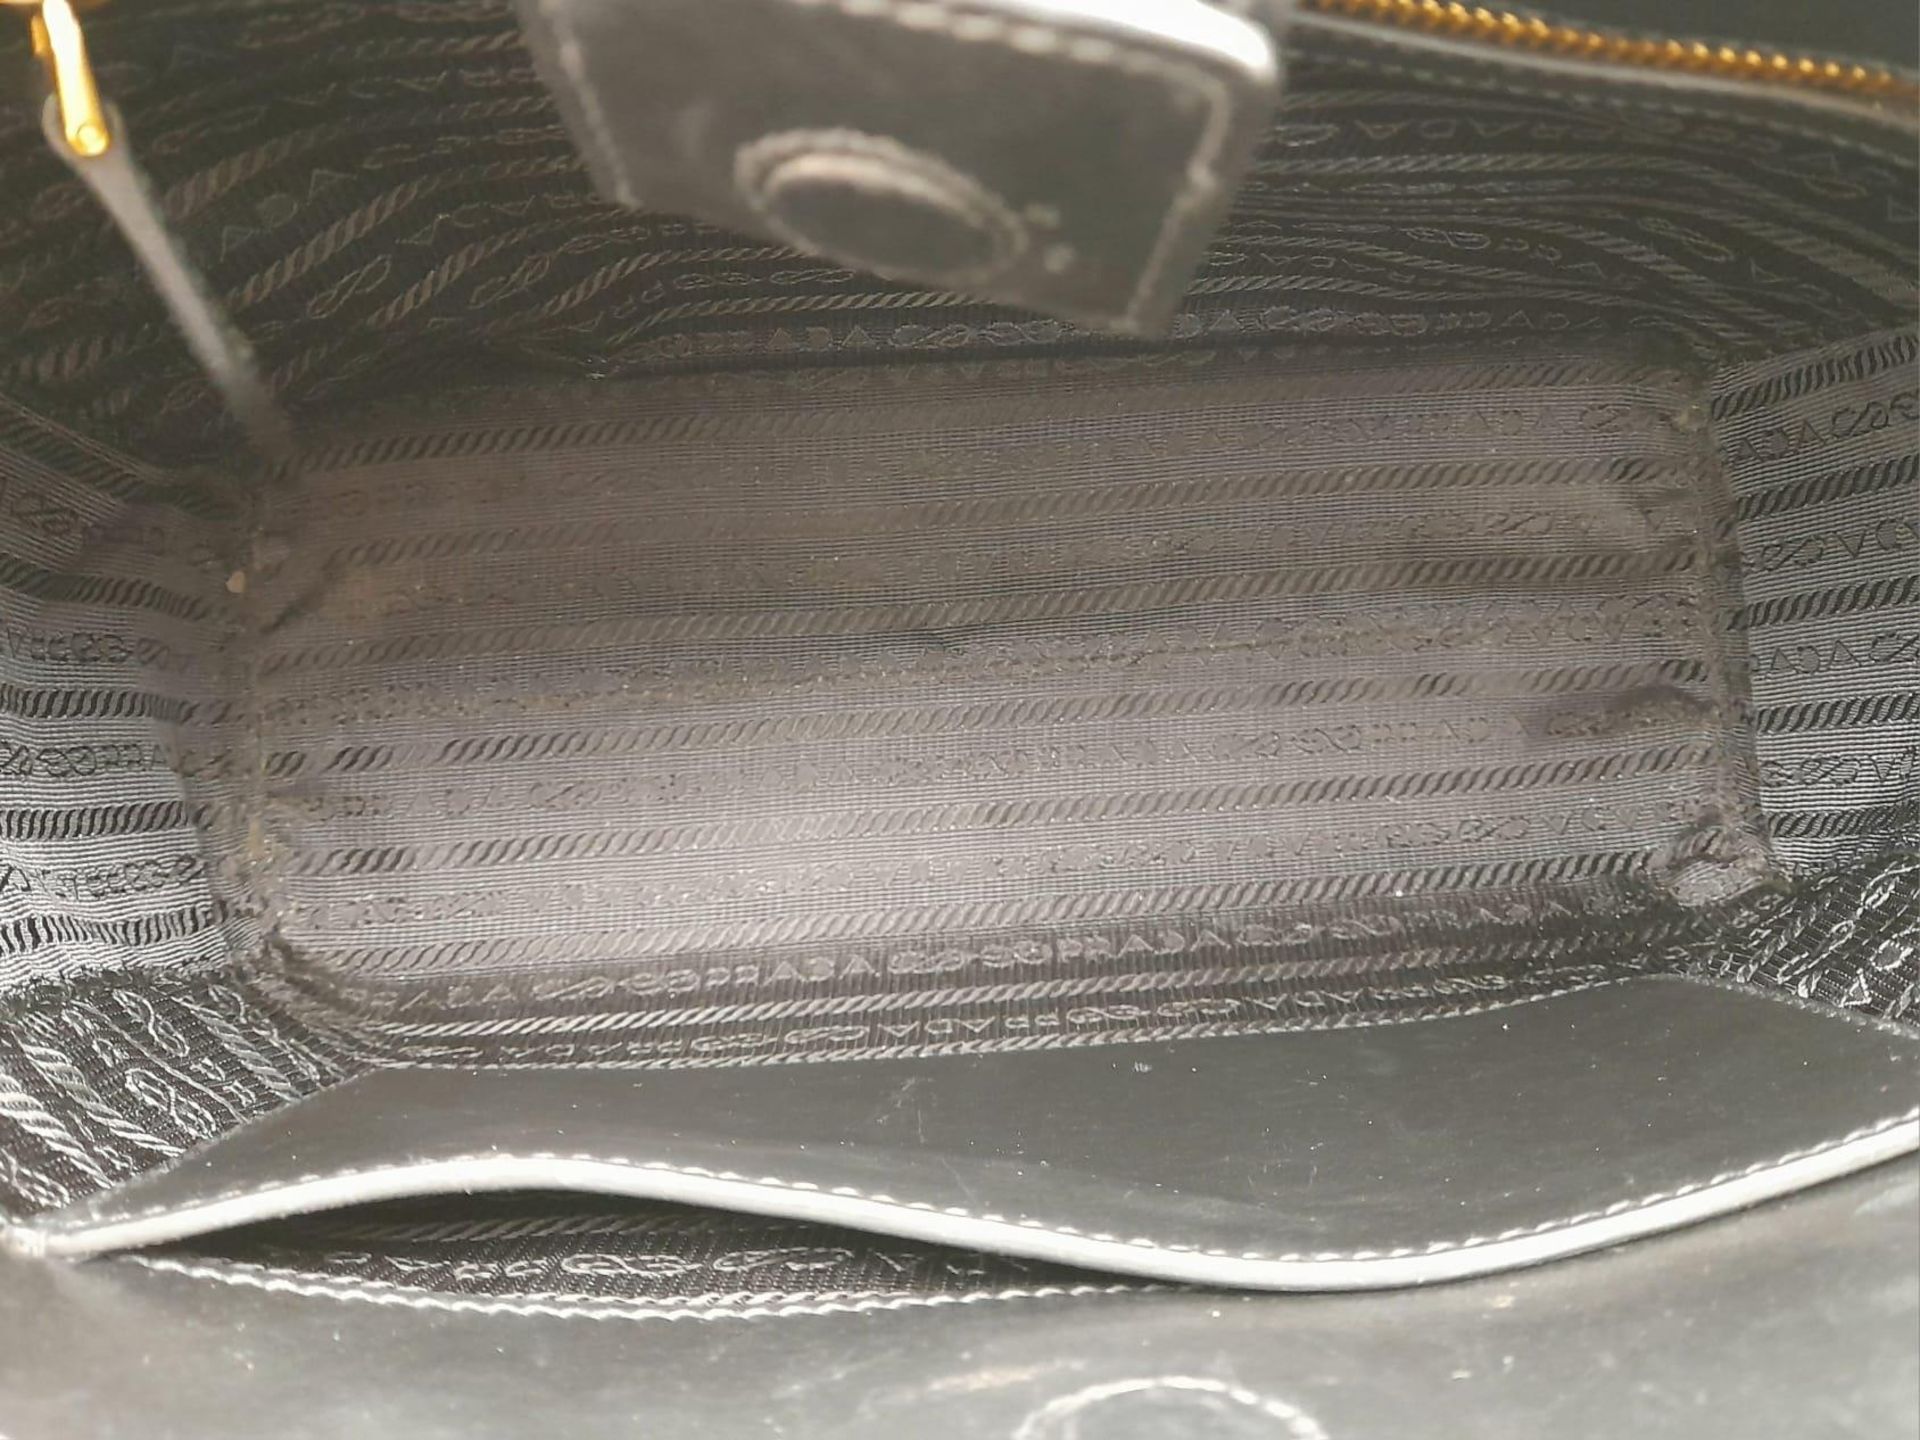 A Prada Black Leather Handbag with Adjustable Shoulder Strap. Textured leather with gold-tone - Bild 3 aus 8